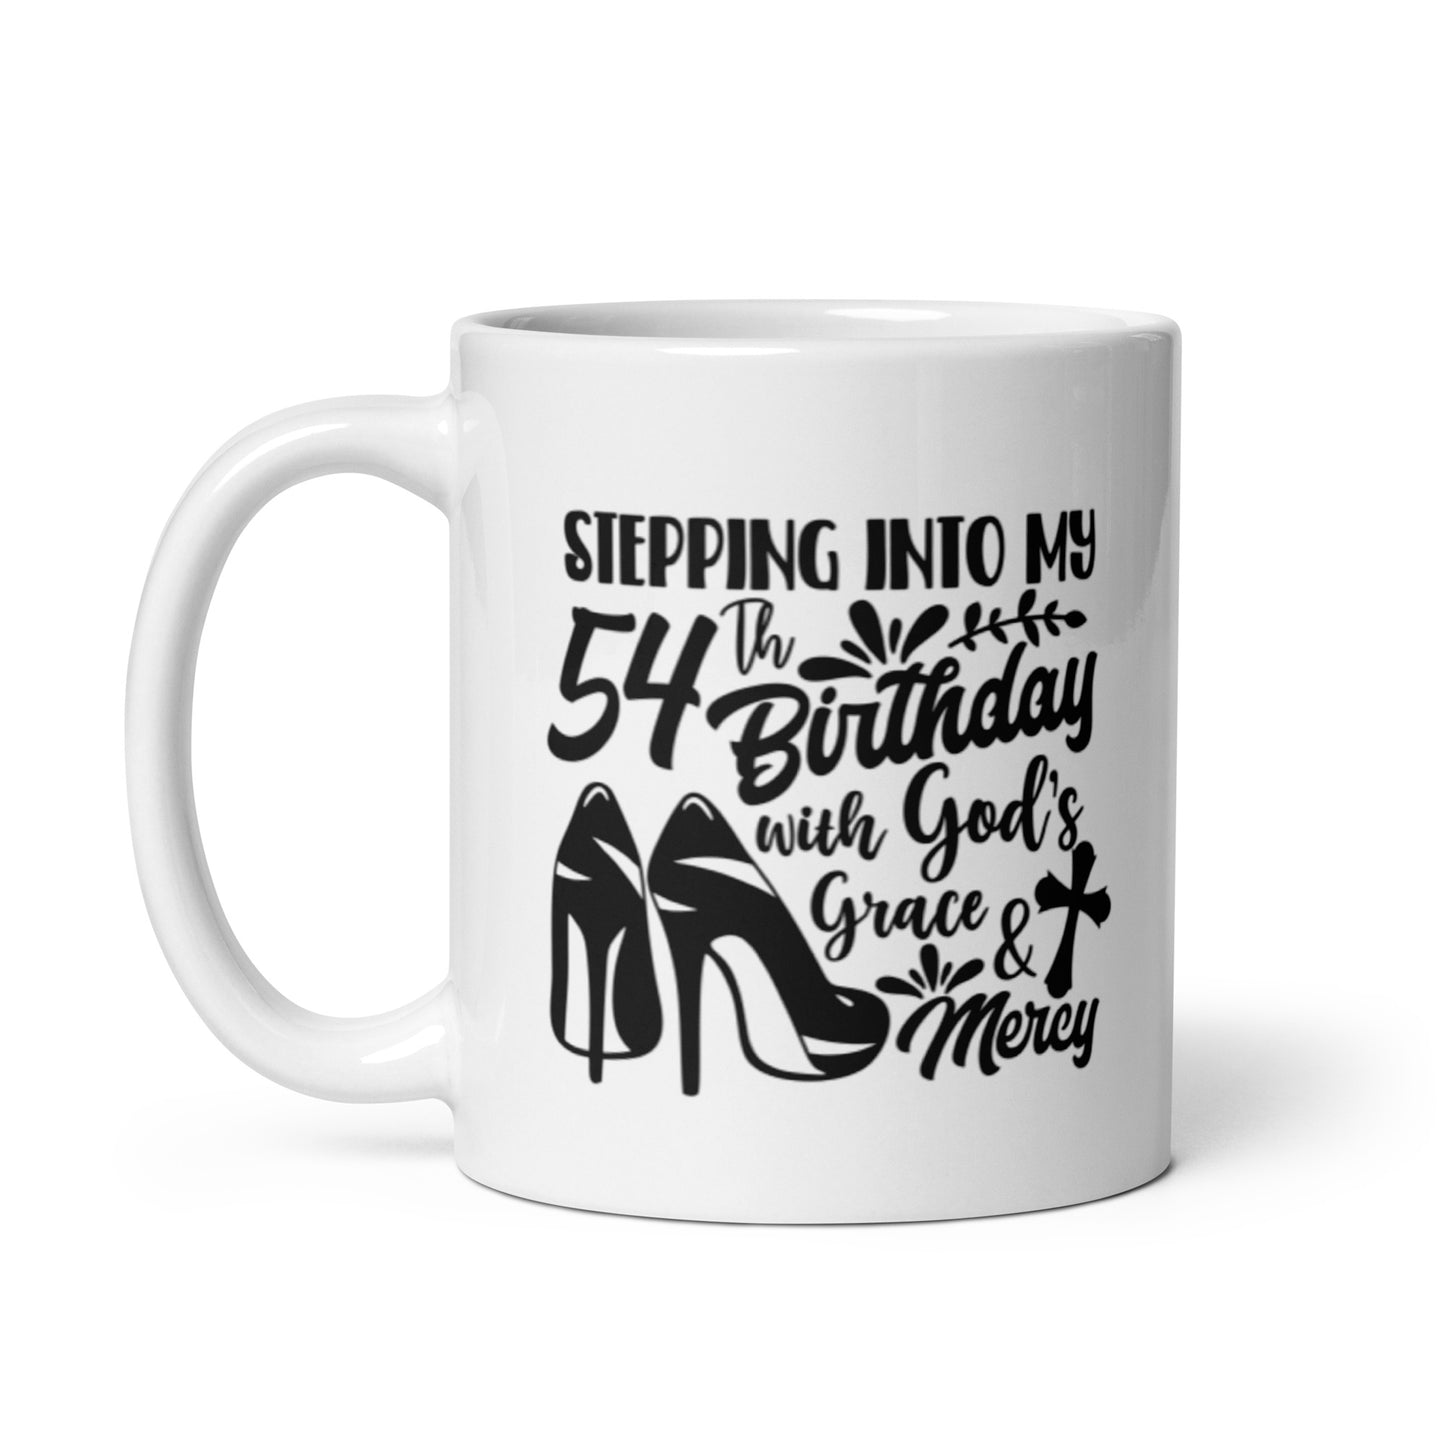 Stepping Into My 54th Birthday With God's Grace & Mercy White Ceramic Mug